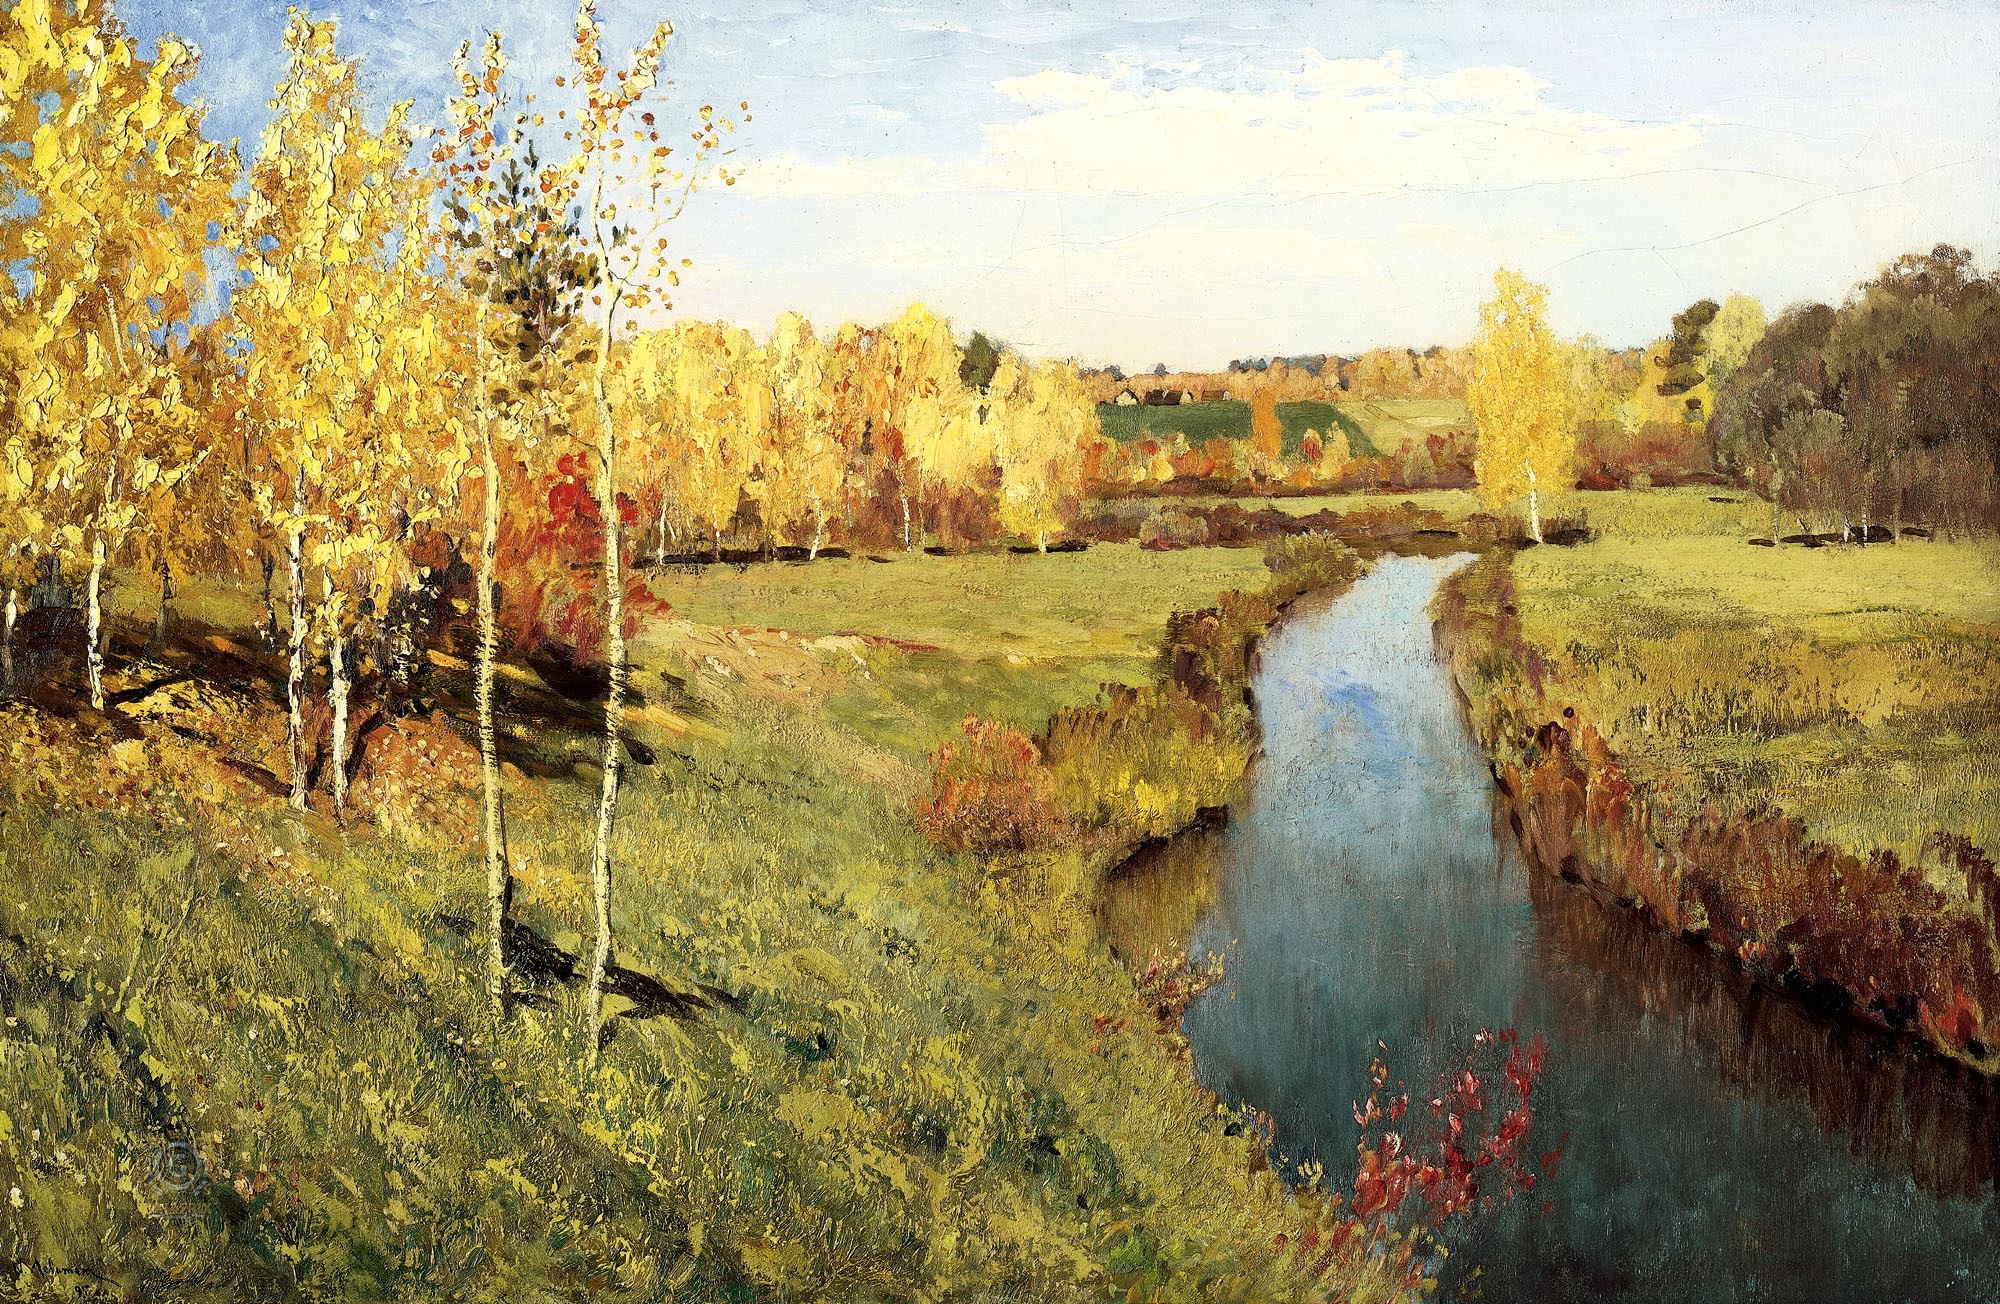 Осень на картинах художников: Исаака Левитана, Бориса Кустодиева, Исаака  Бродского и других.